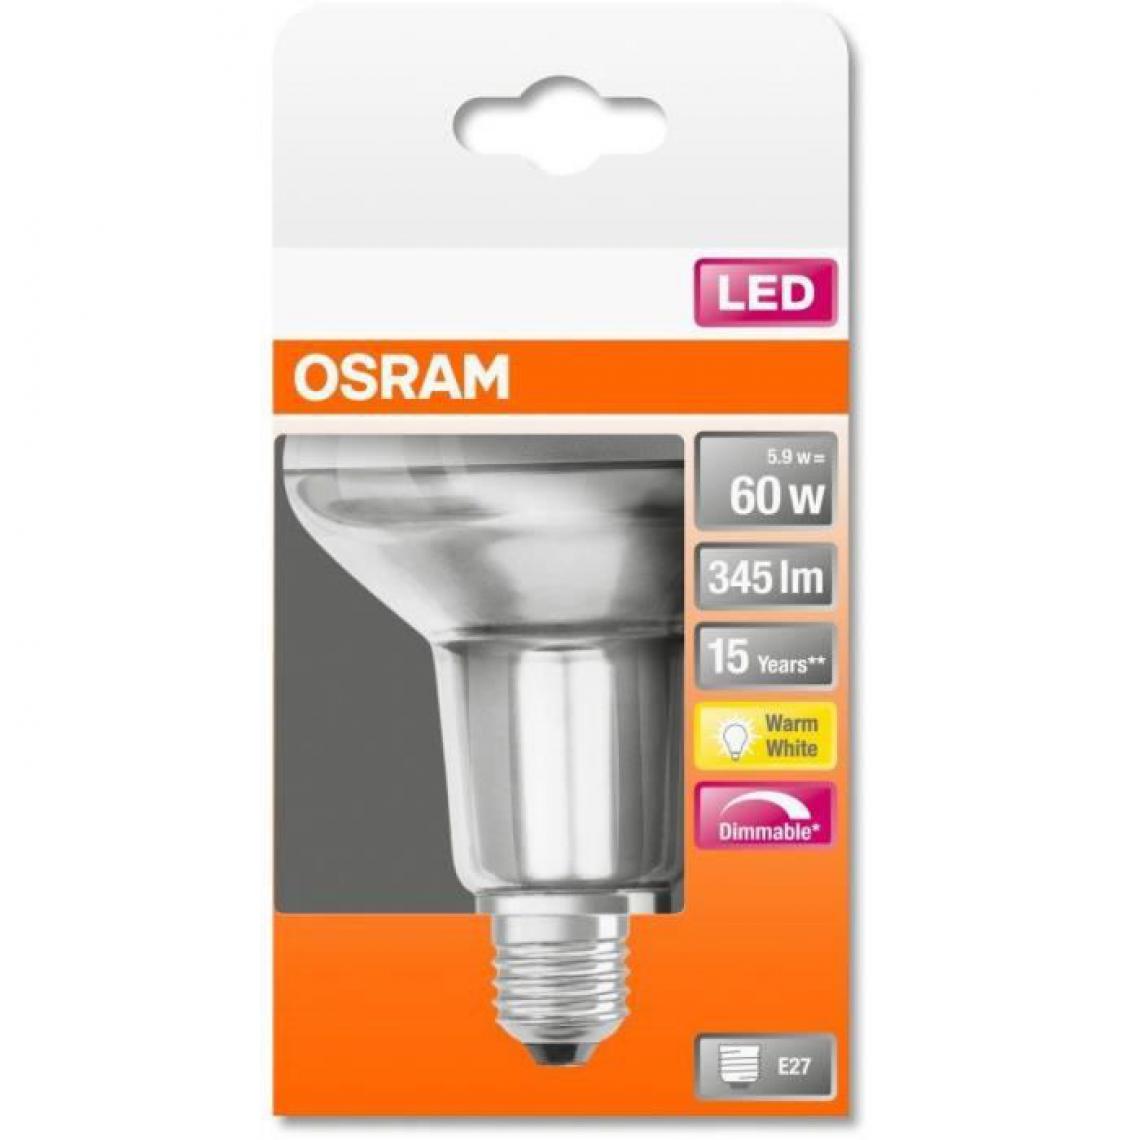 Osram - Spot R80 LED verre clair variable - 5,9W - Ampoules LED